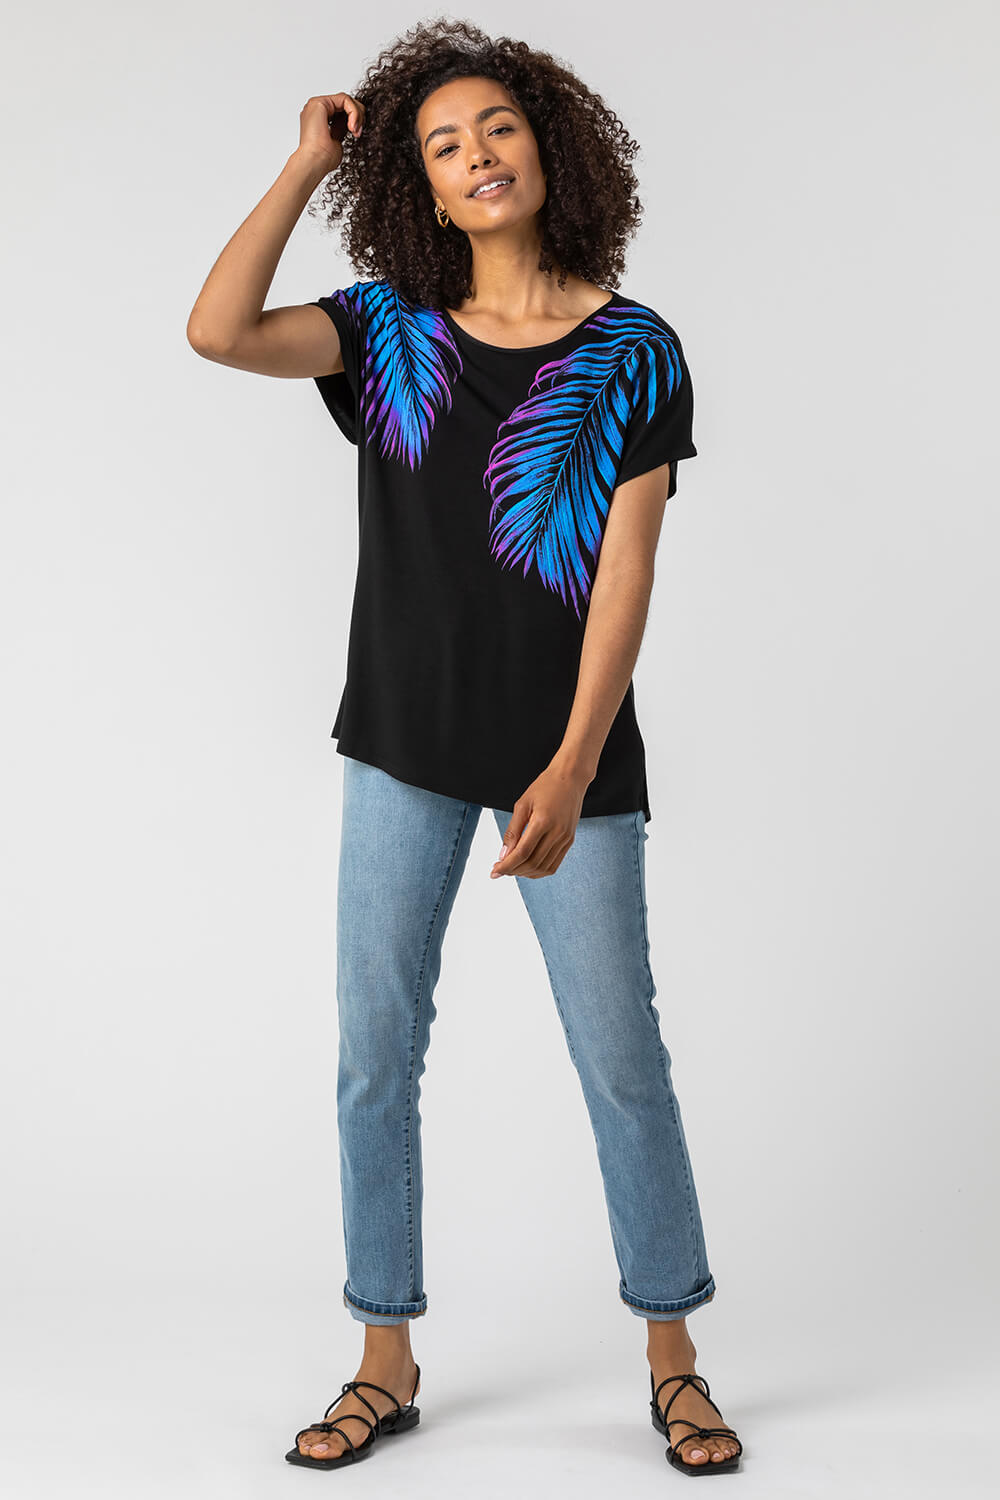 Black Tropical Print T-Shirt Top, Image 3 of 4